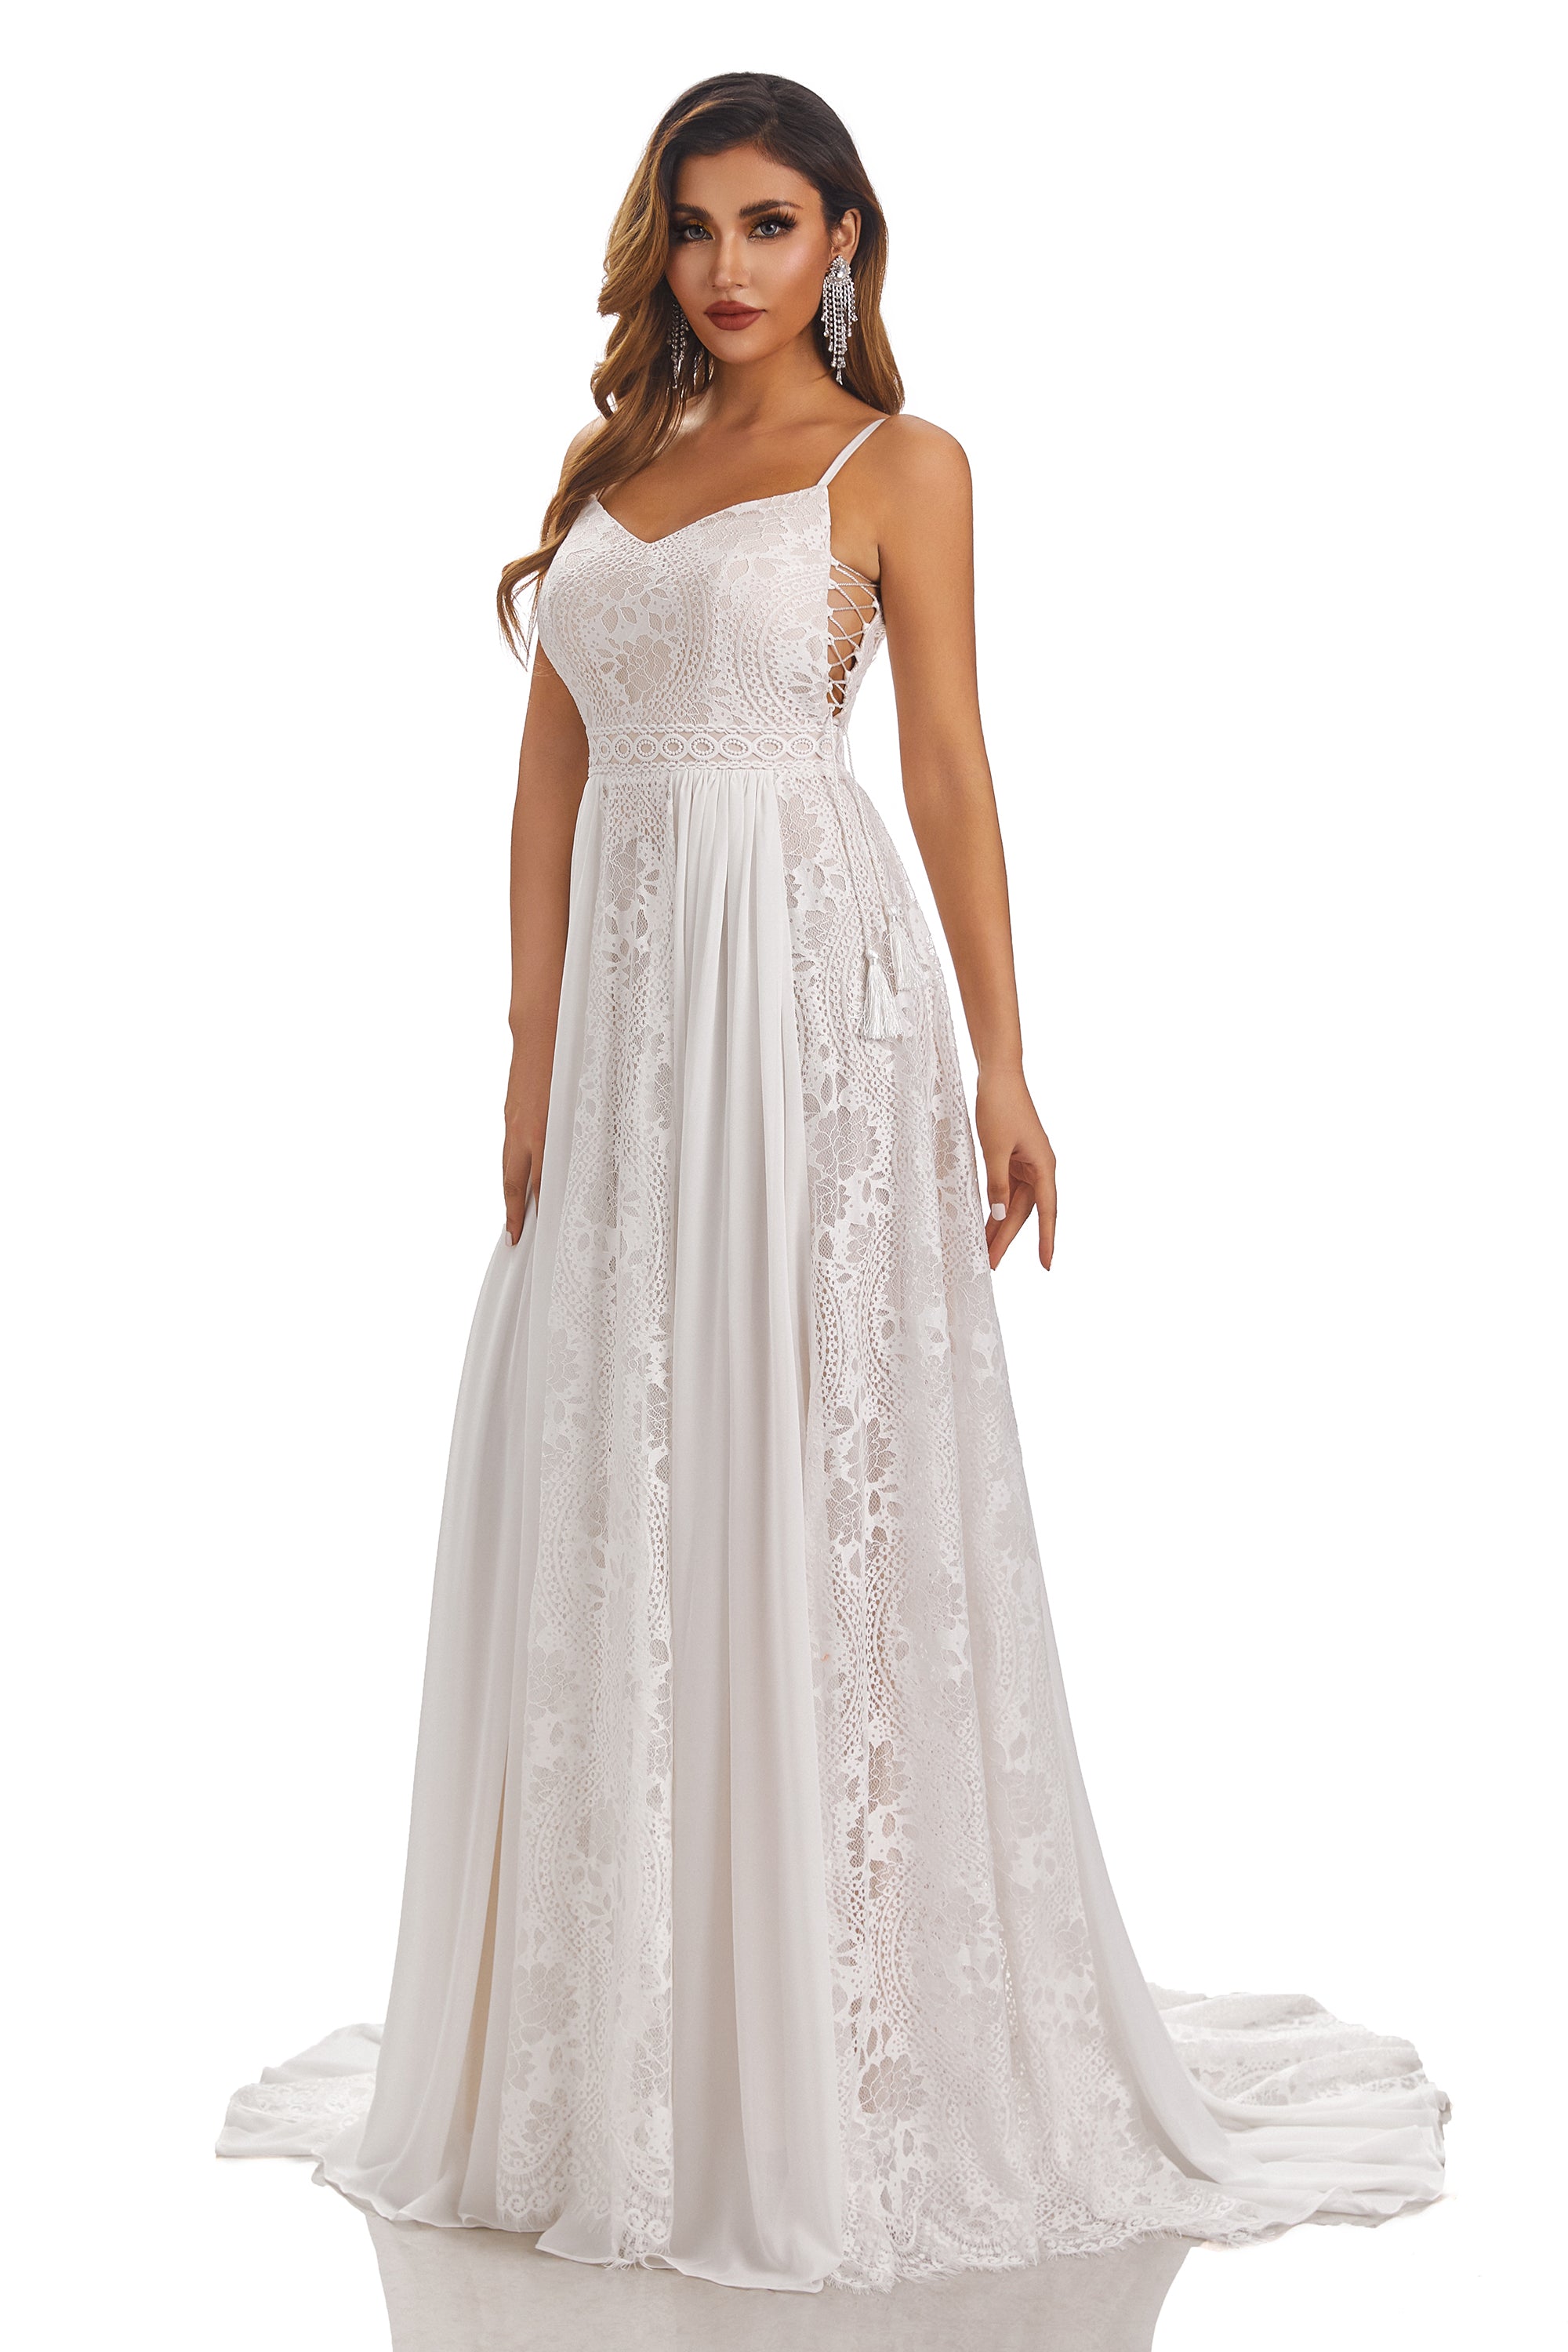 A-Line Spaghetti-Straps Sleeveless Chiffon Wedding Dress With Lace Appliques